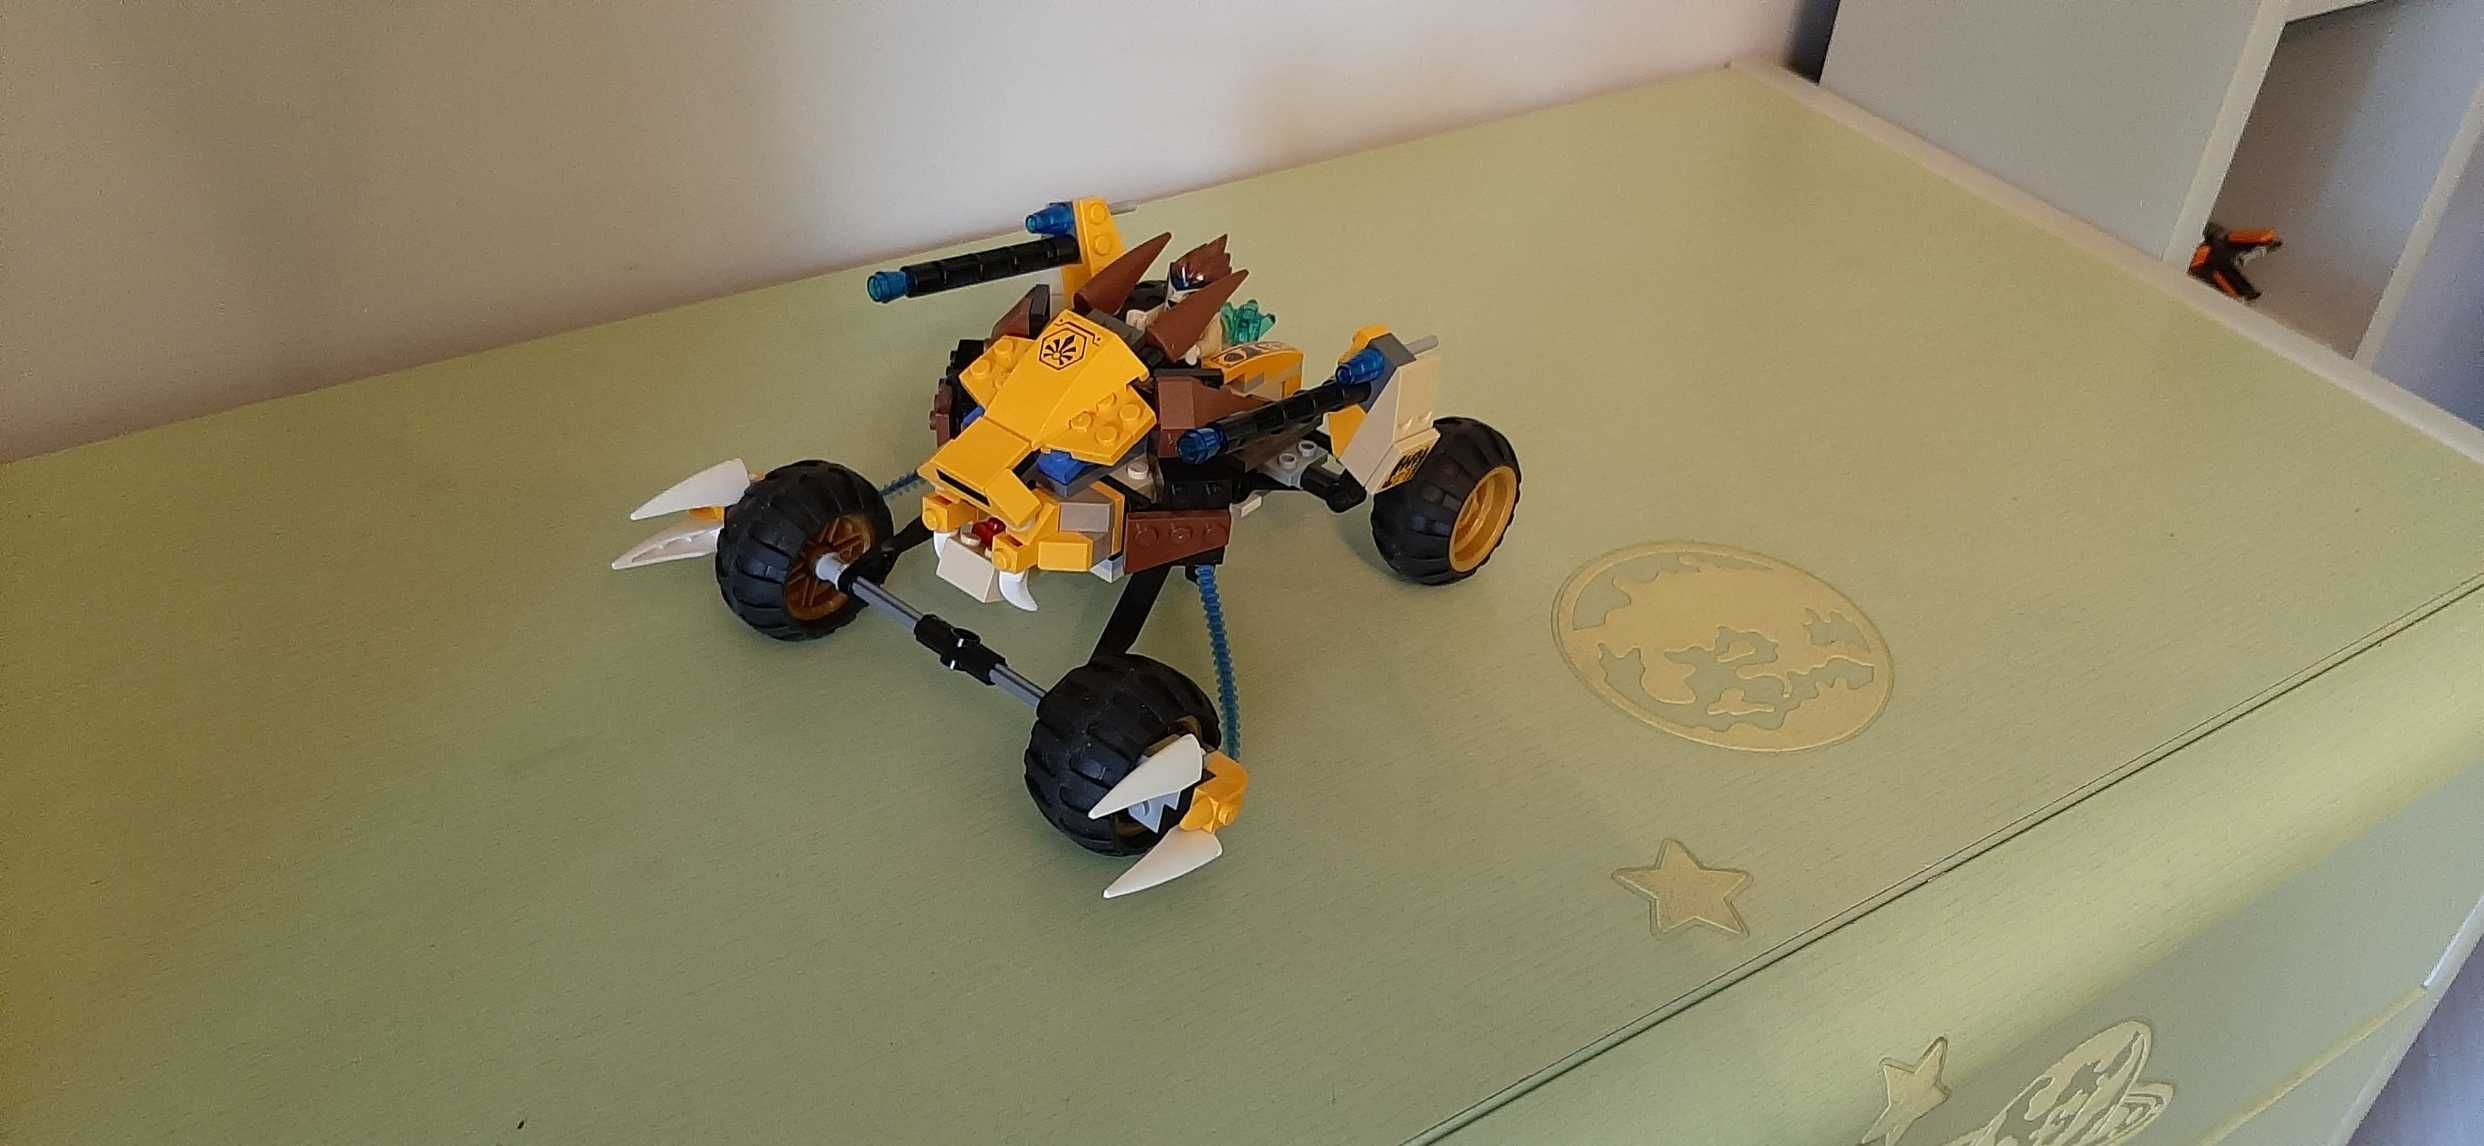 LEGO CHIMA 70002 - Lwi atak Lennoxa